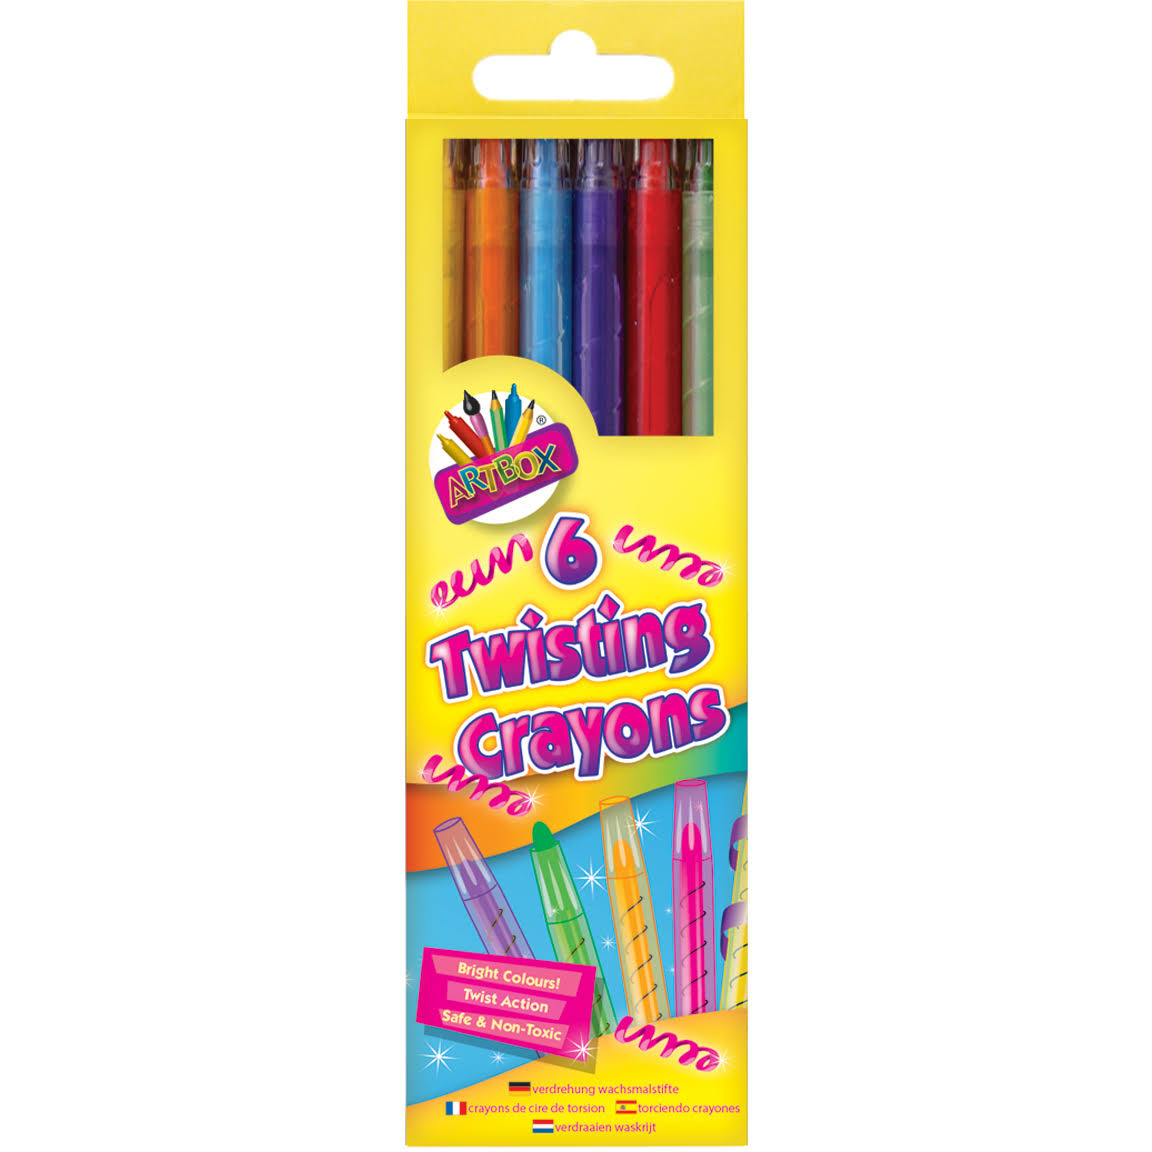 Artbox - 6 Twisting Crayons Pack